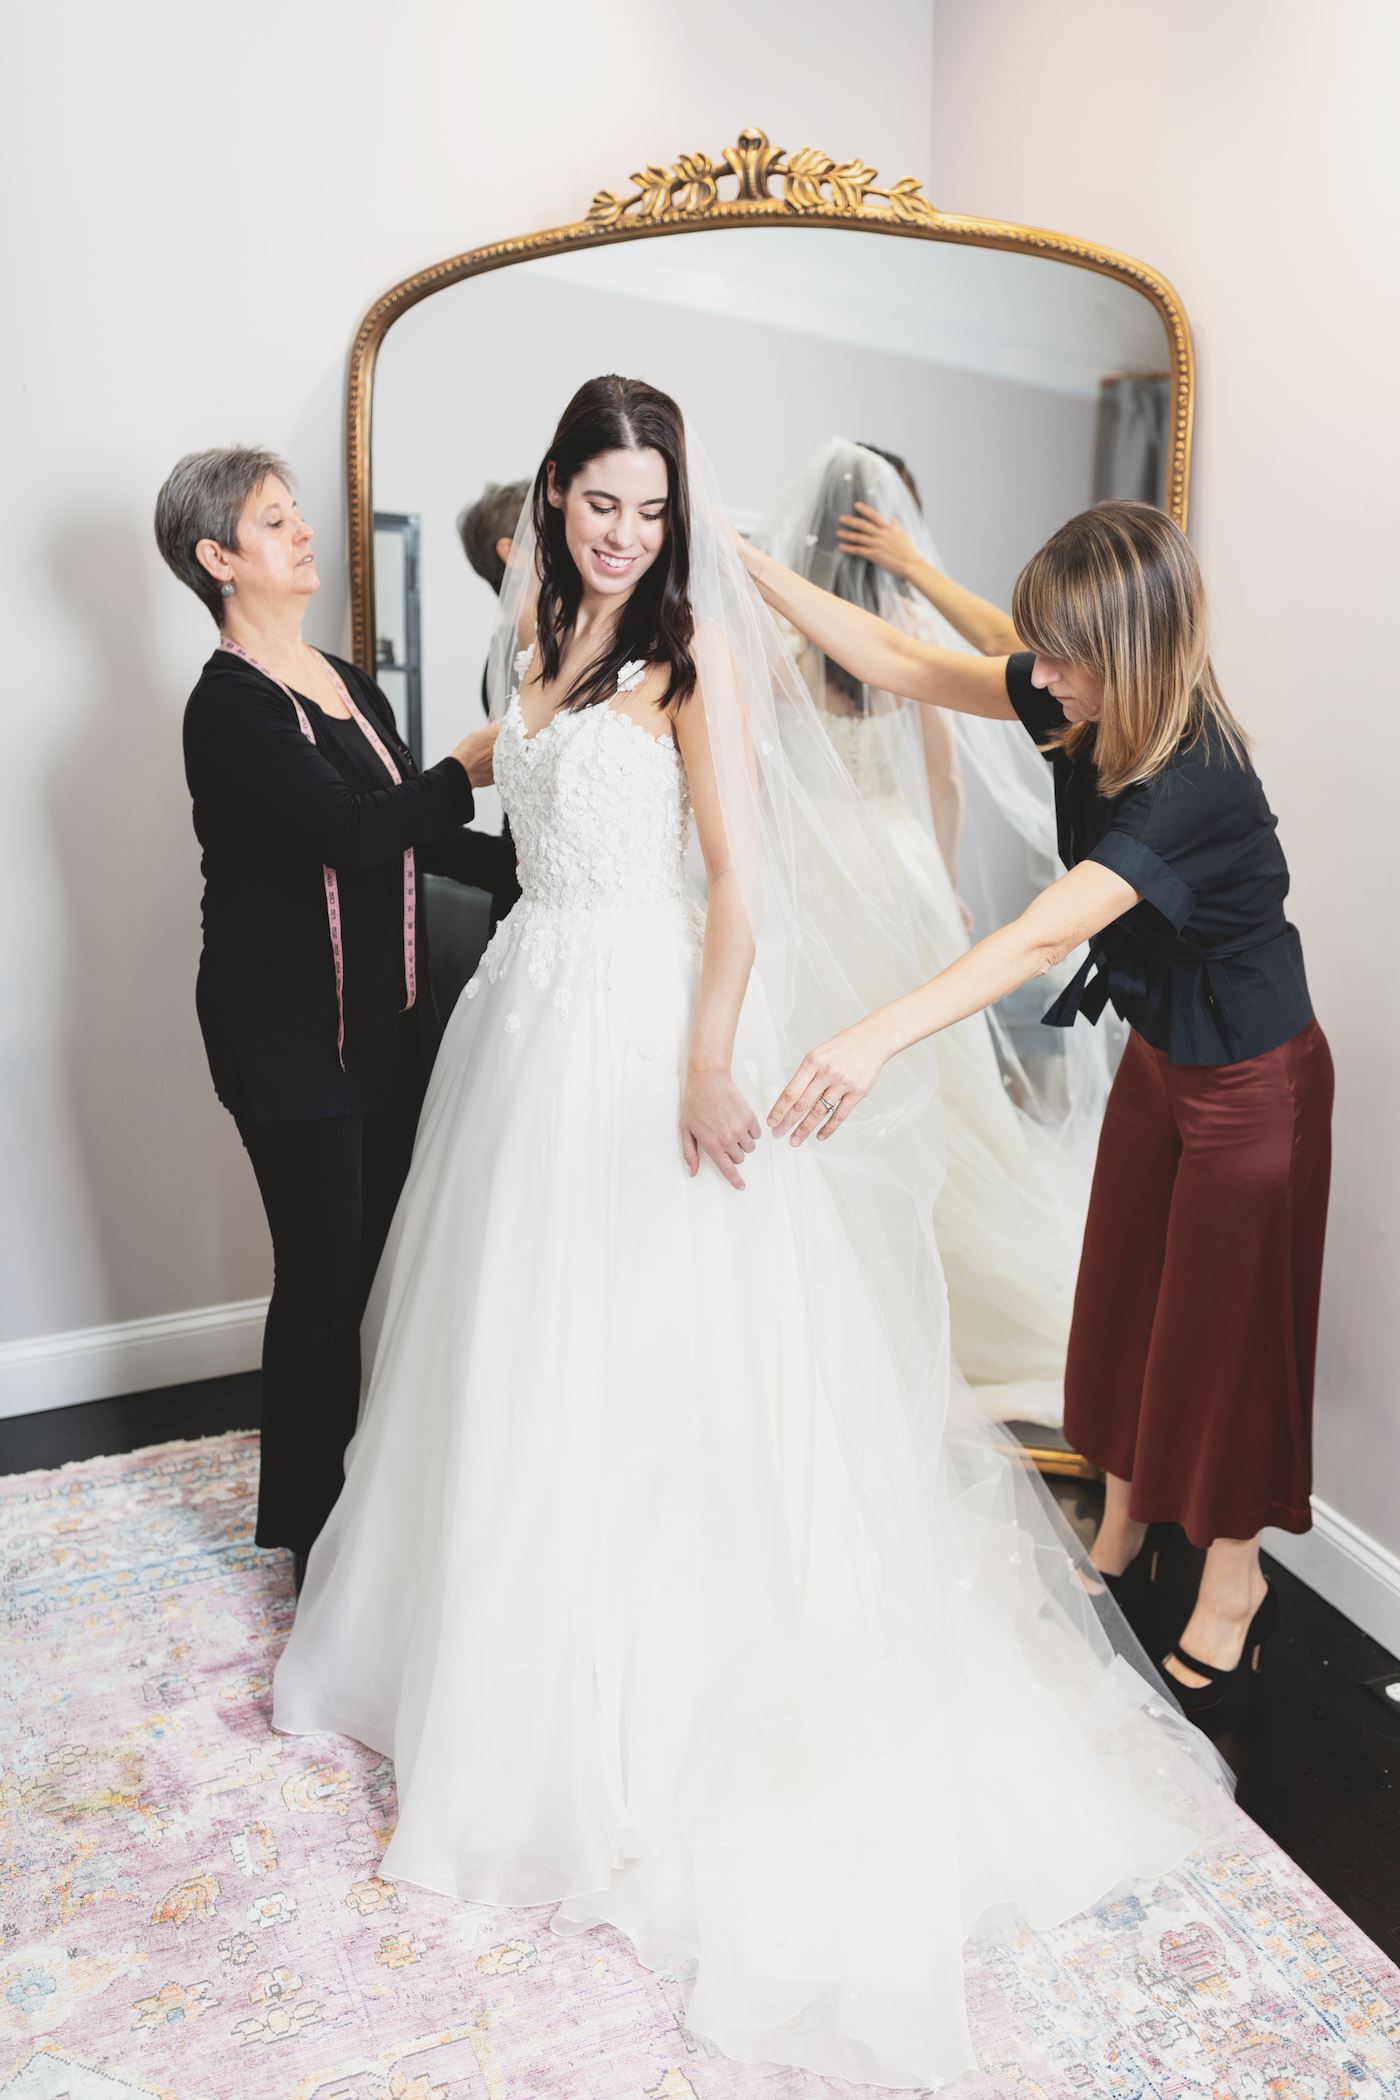 Body Positivity When Wedding Dress Shopping Image